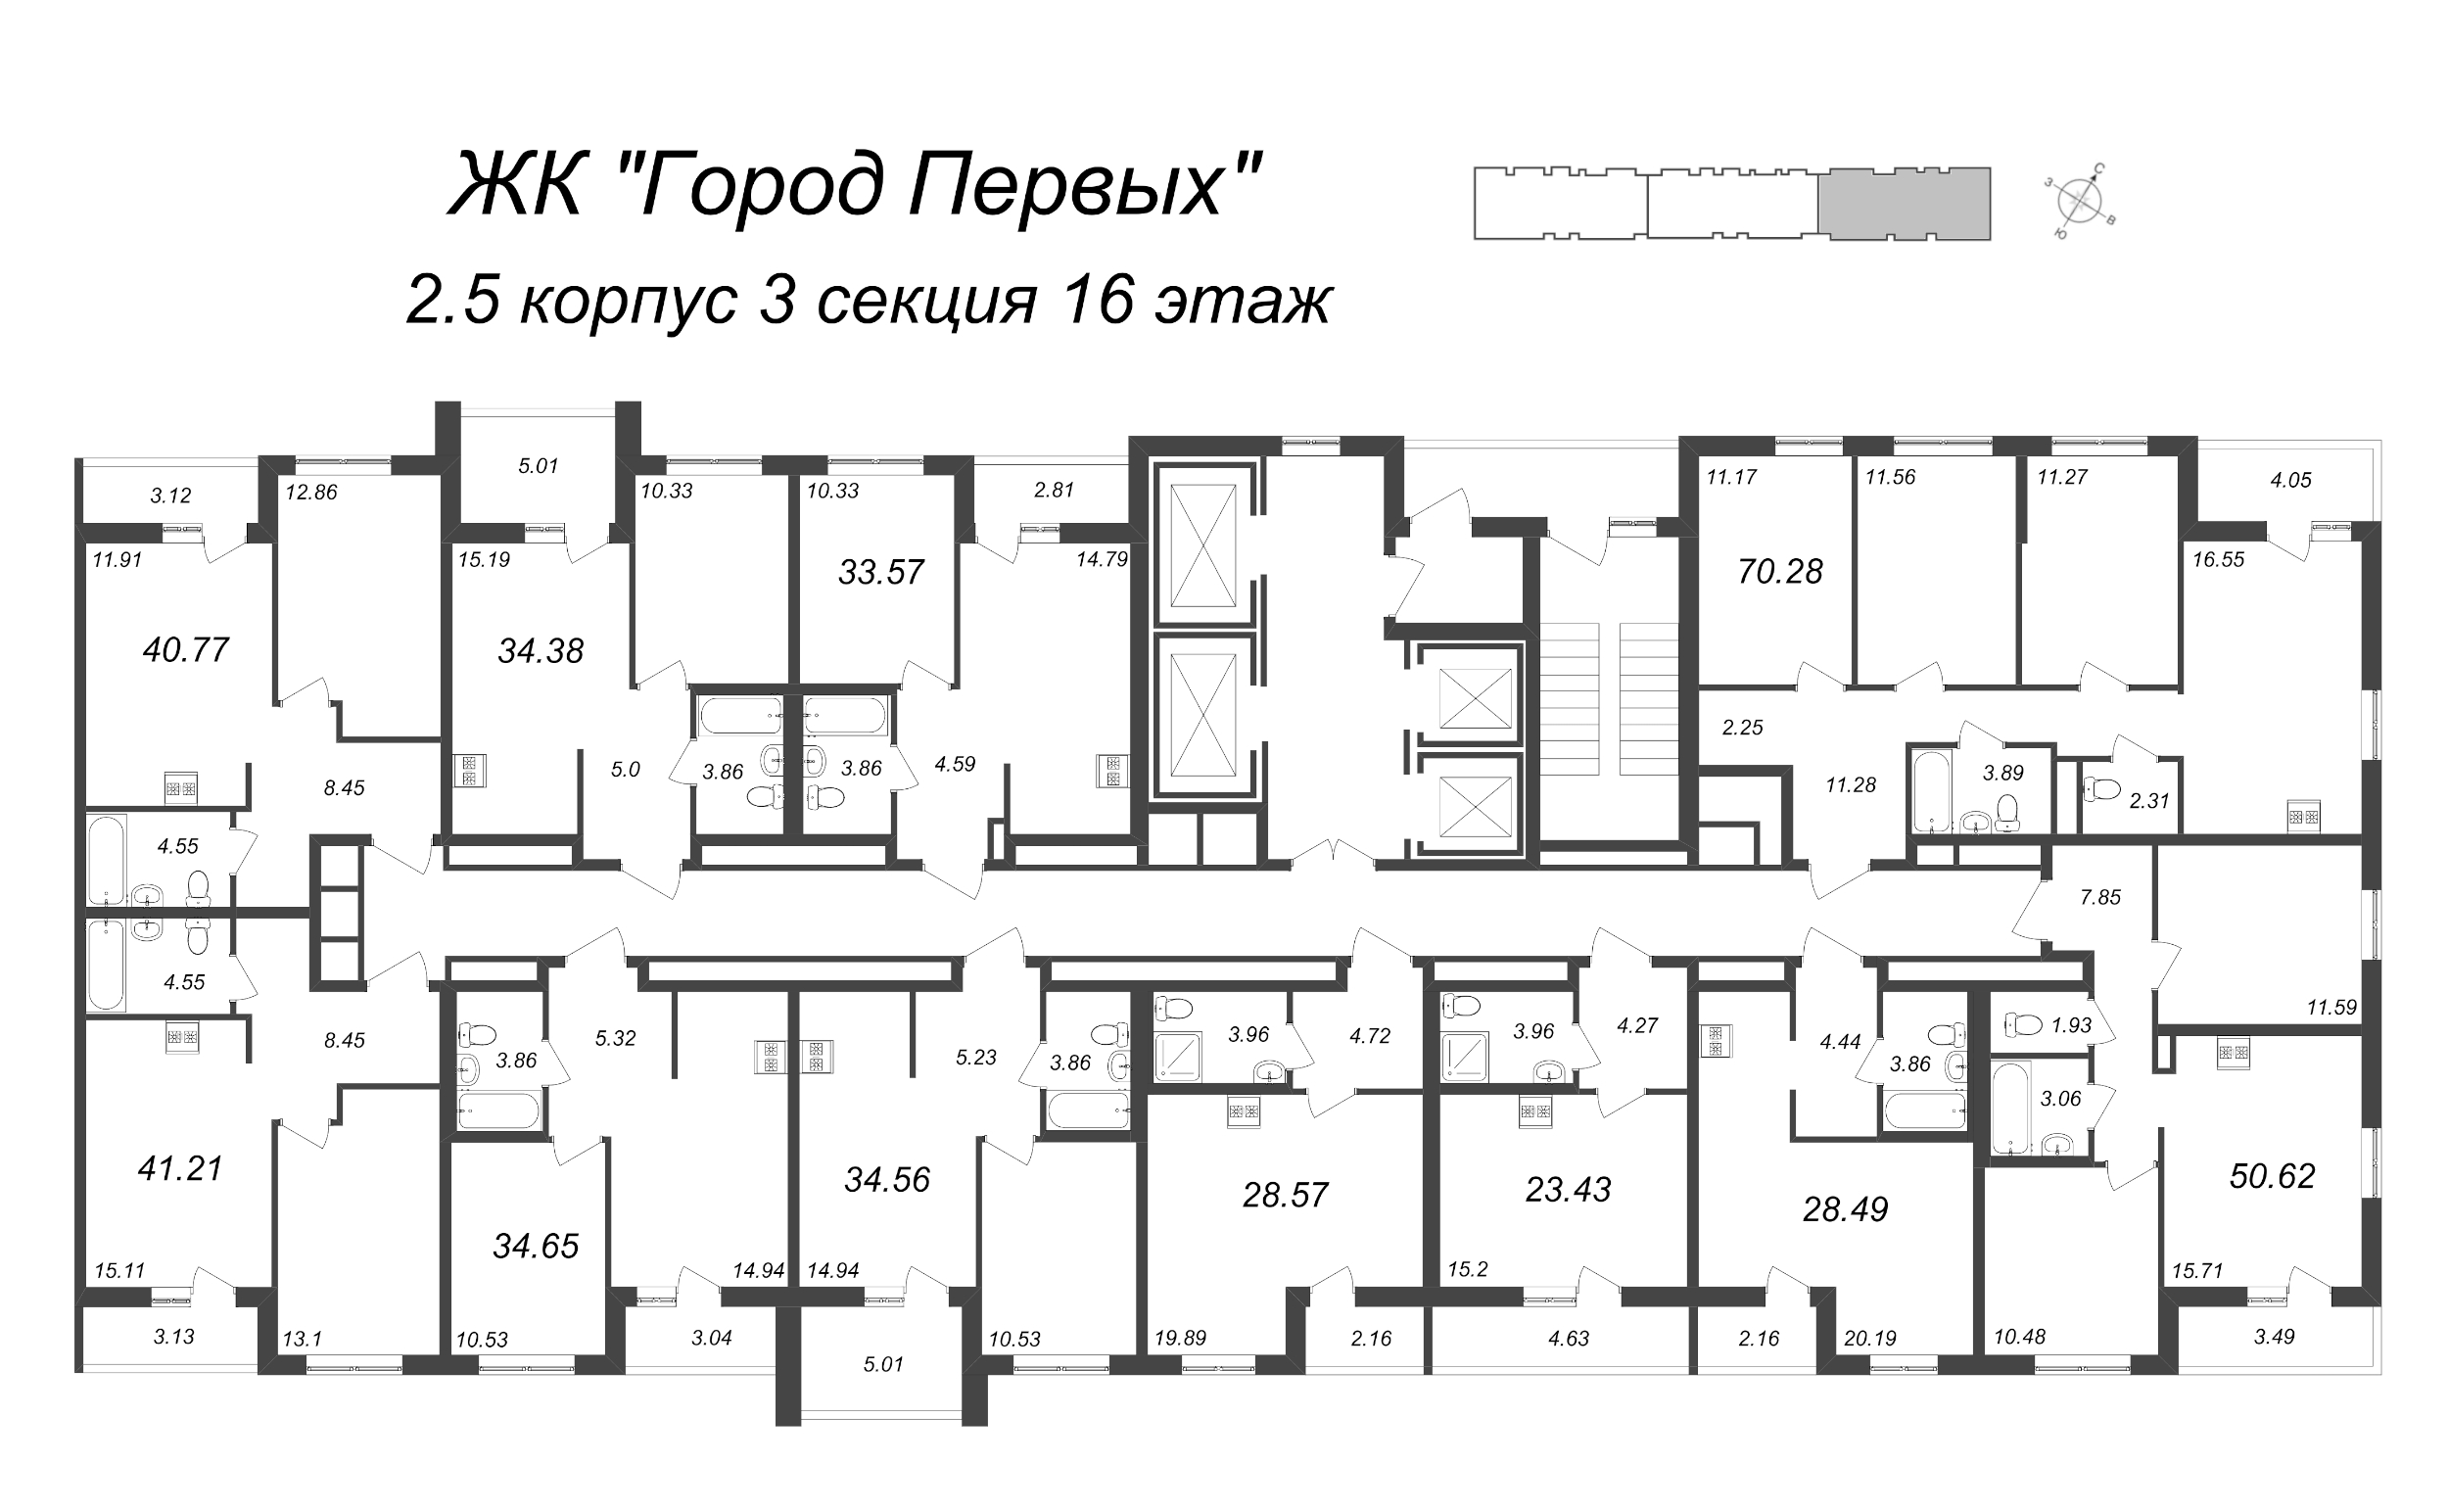 3-комнатная (Евро) квартира, 50.62 м² - планировка этажа